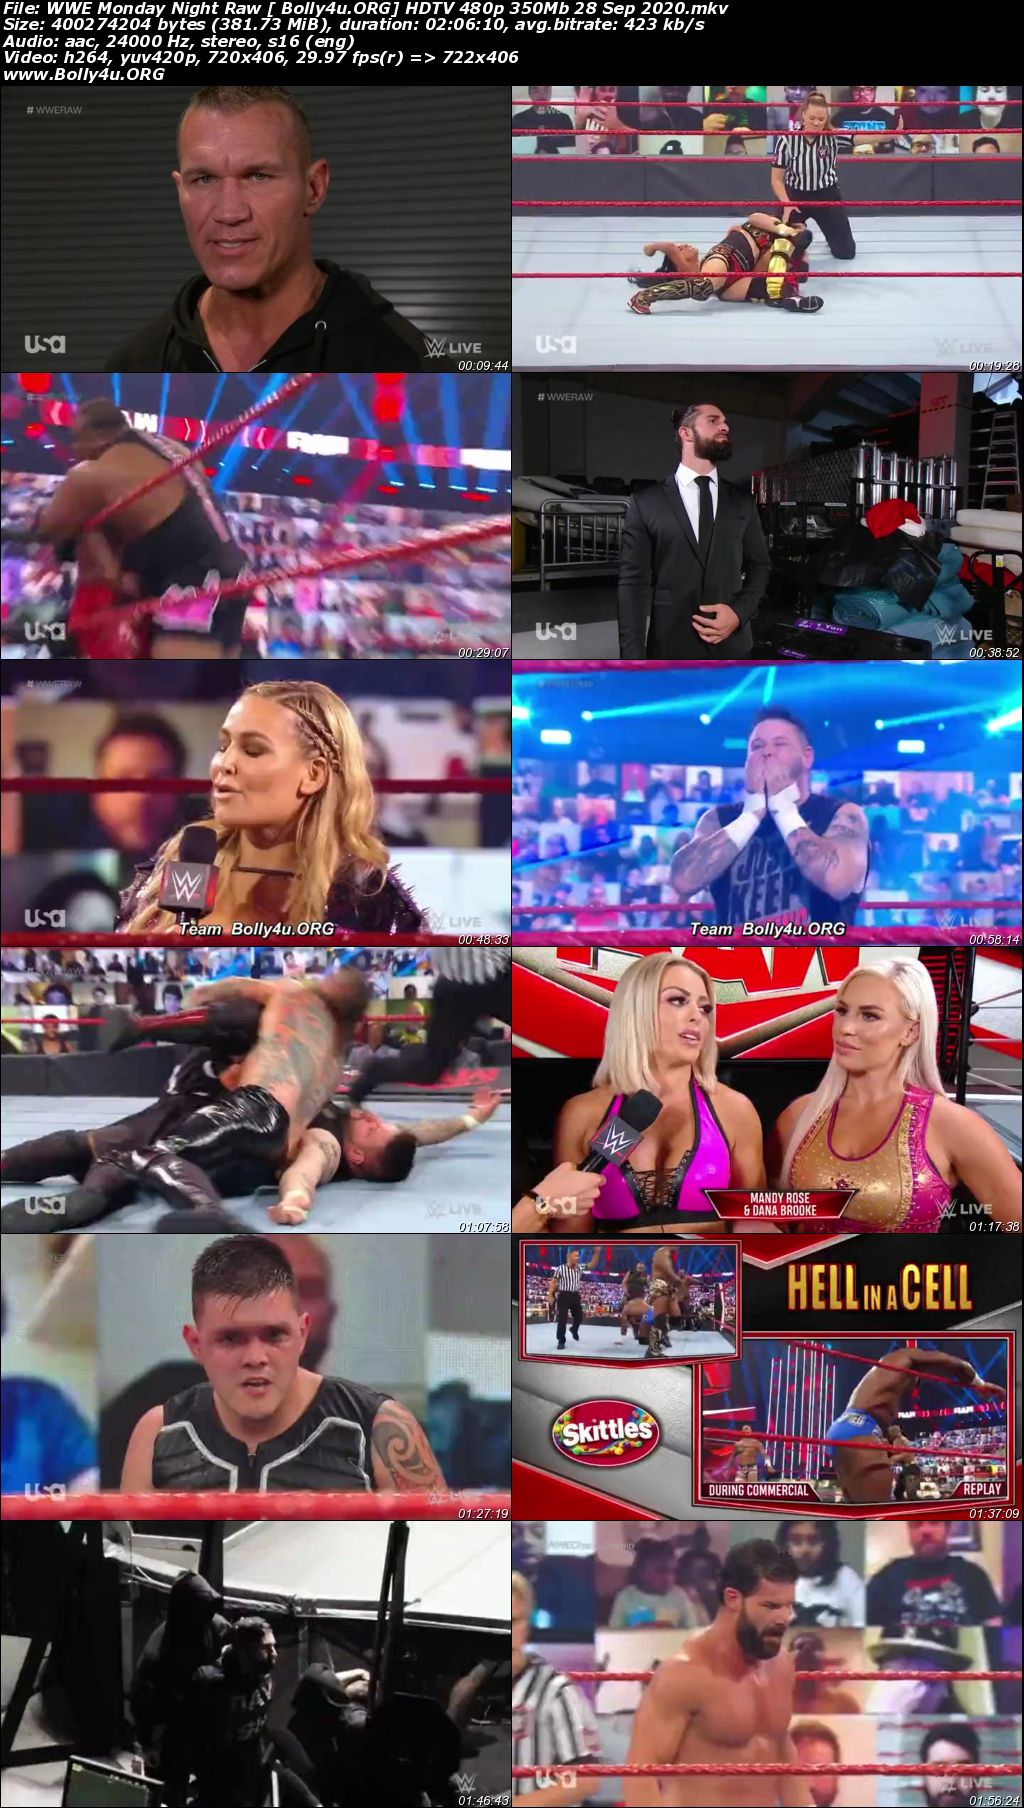 WWE Monday Night Raw HDTV 480p 350Mb 28 September 2020 Download